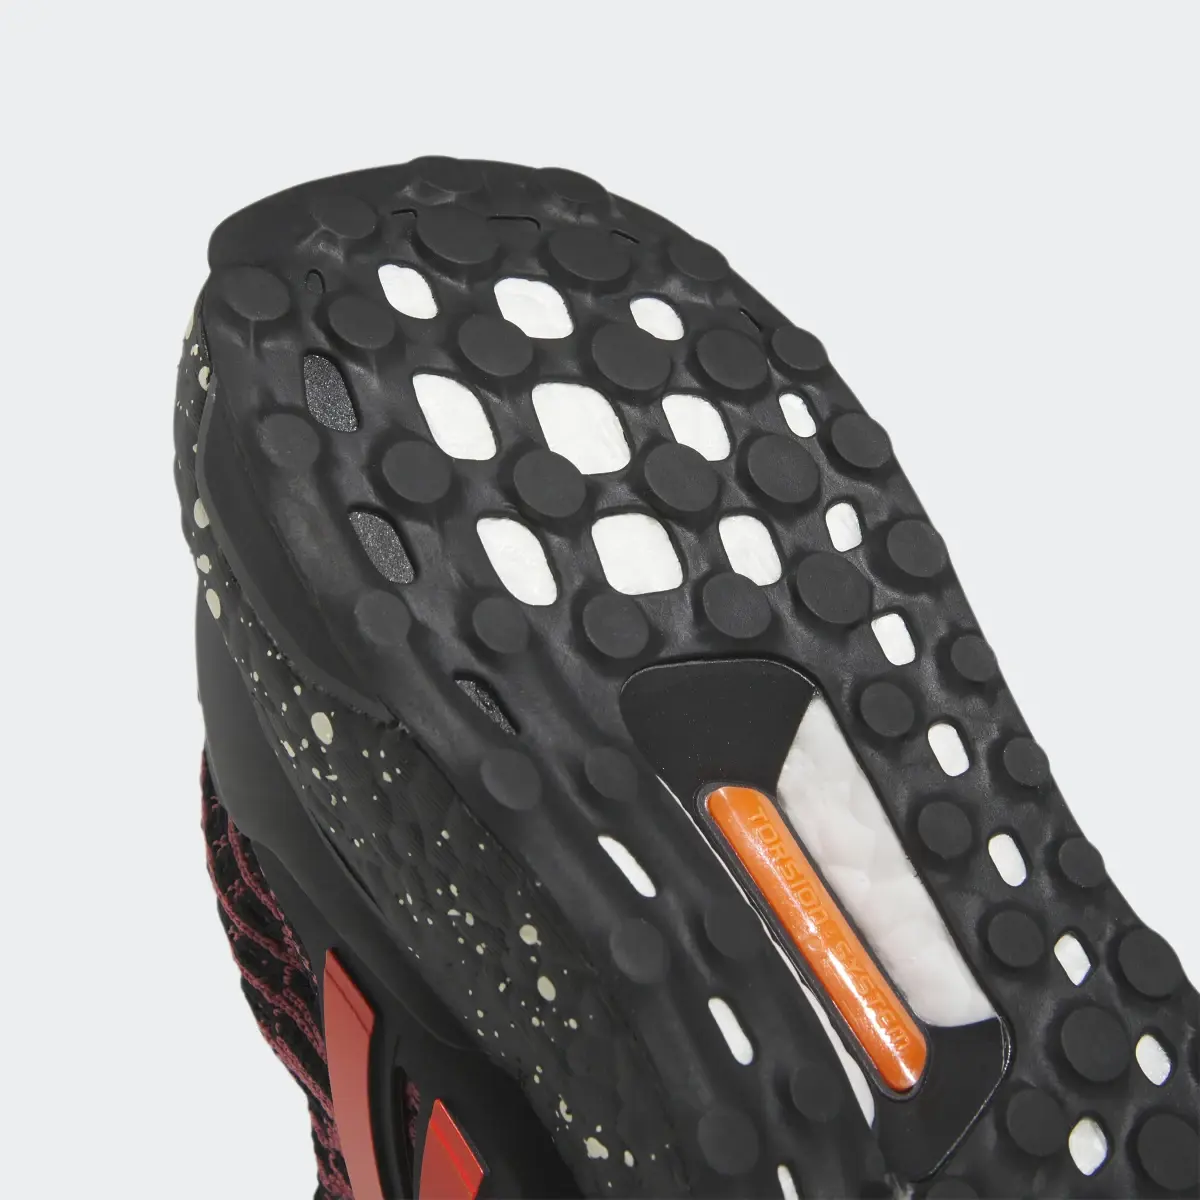 Adidas Chaussure Ultraboost 5.0 DNA Running Sportswear Lifestyle. 3